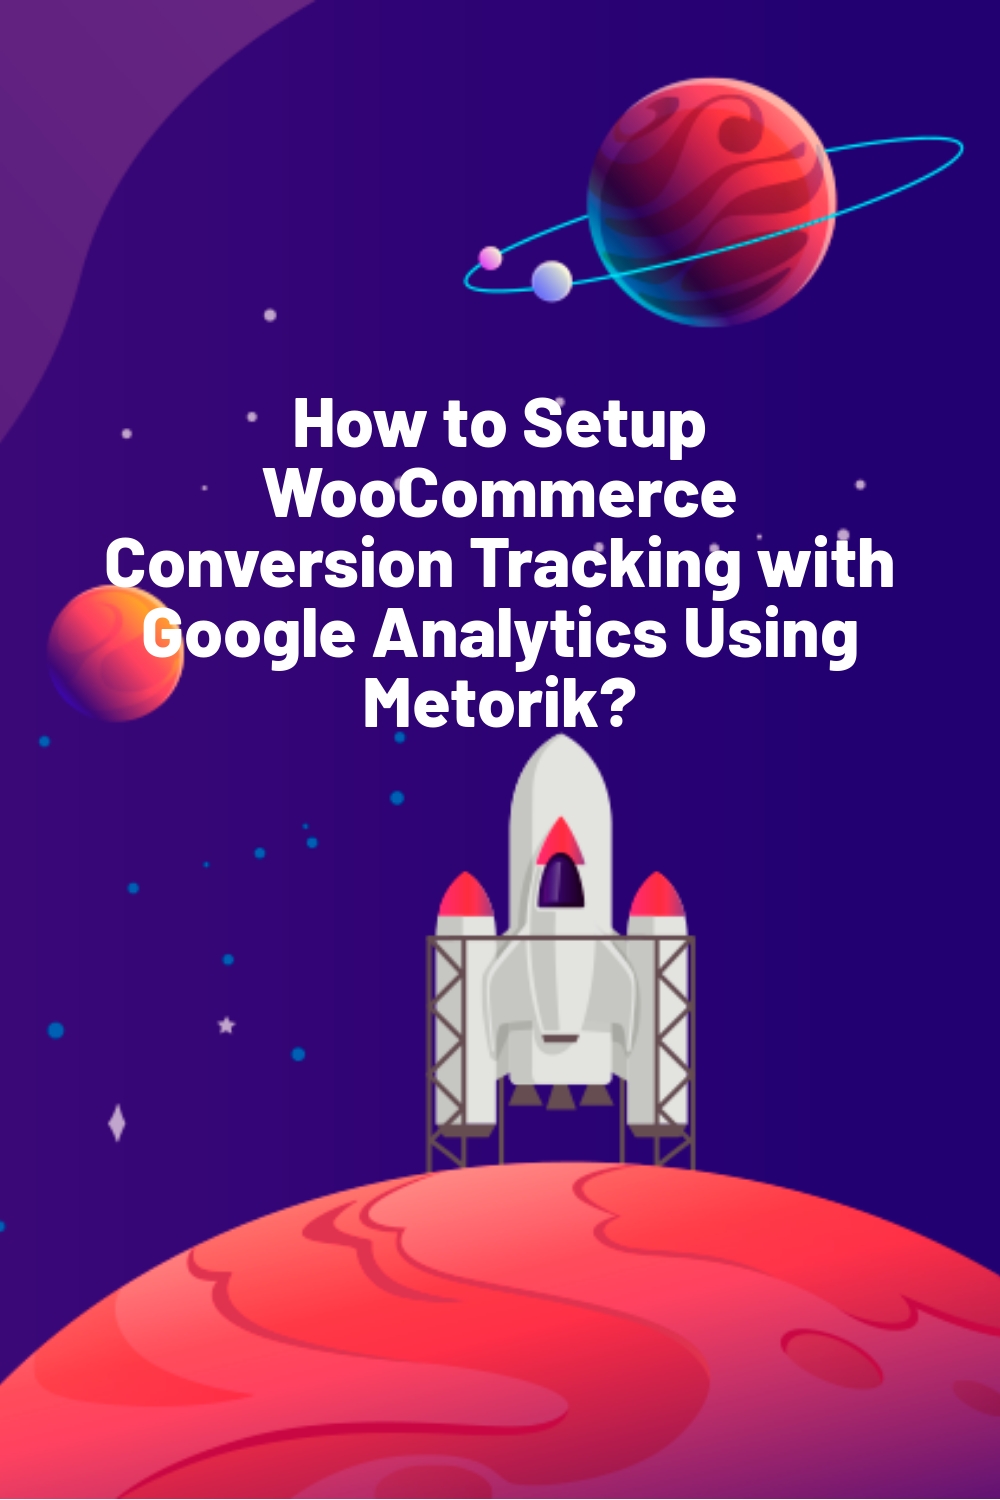 How to Setup WooCommerce Conversion Tracking with Google Analytics Using Metorik?